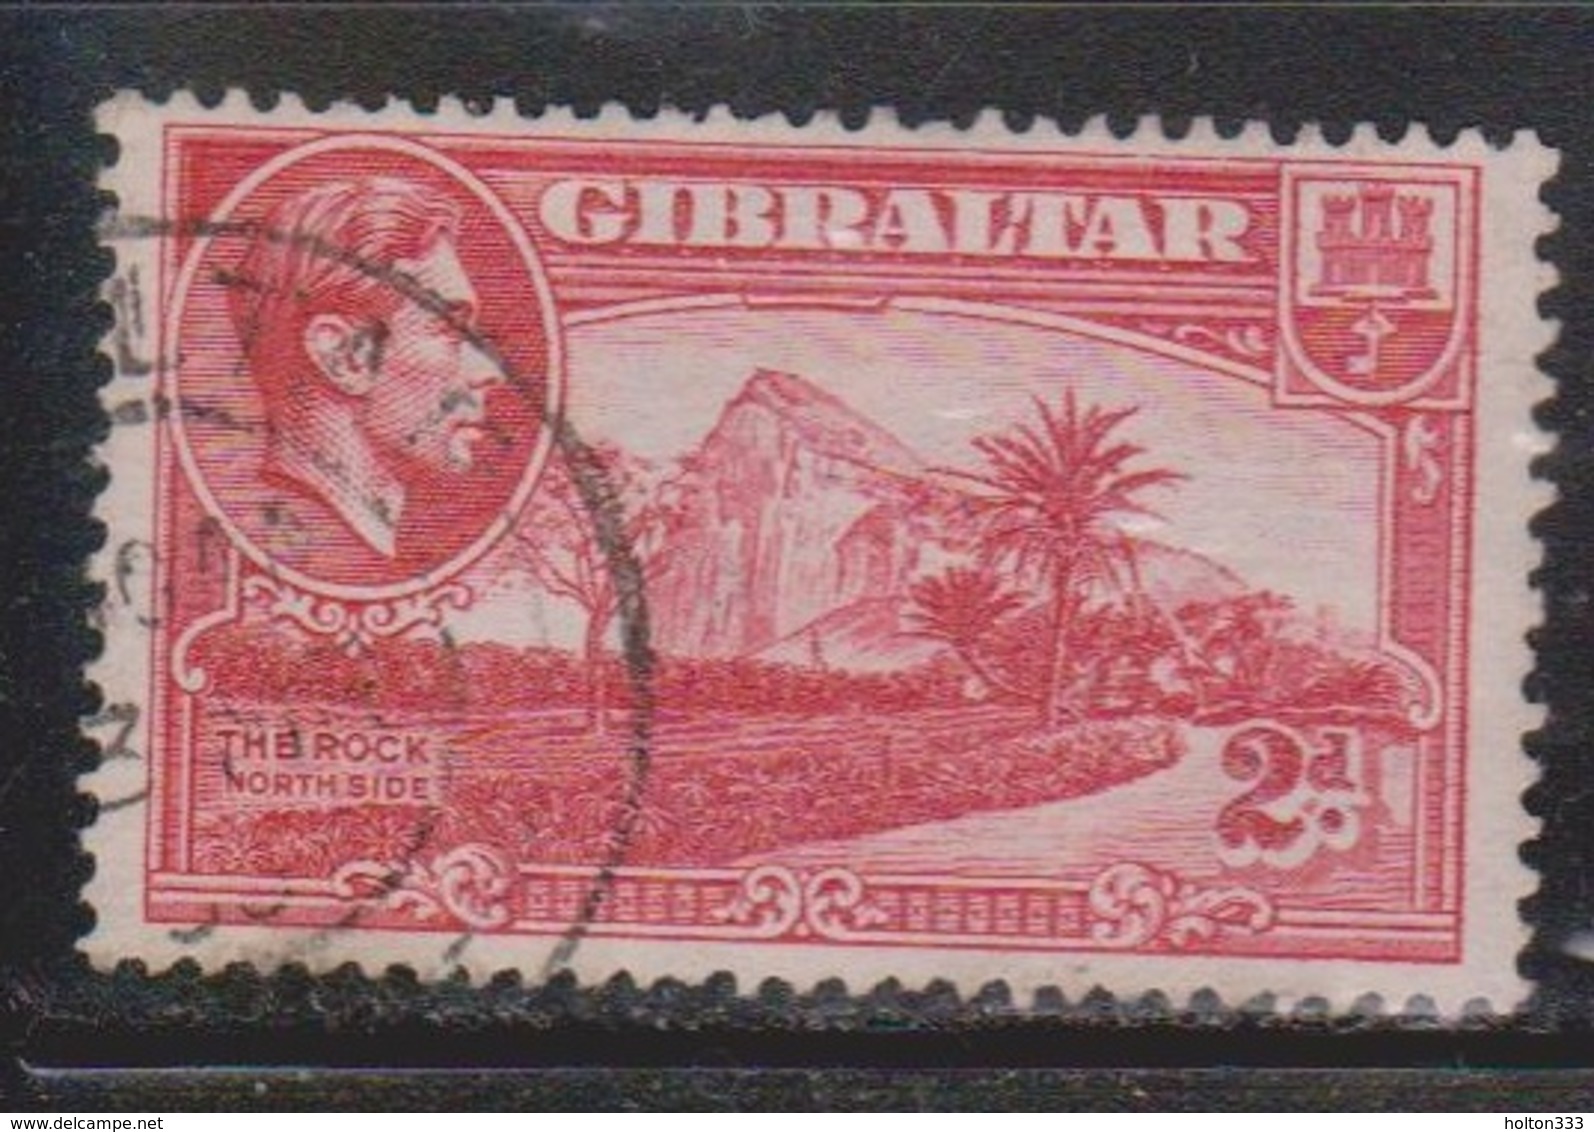 GIBRALTAR Scott # 110b Used - KGVI & View Of The Rock Northside - Gibraltar